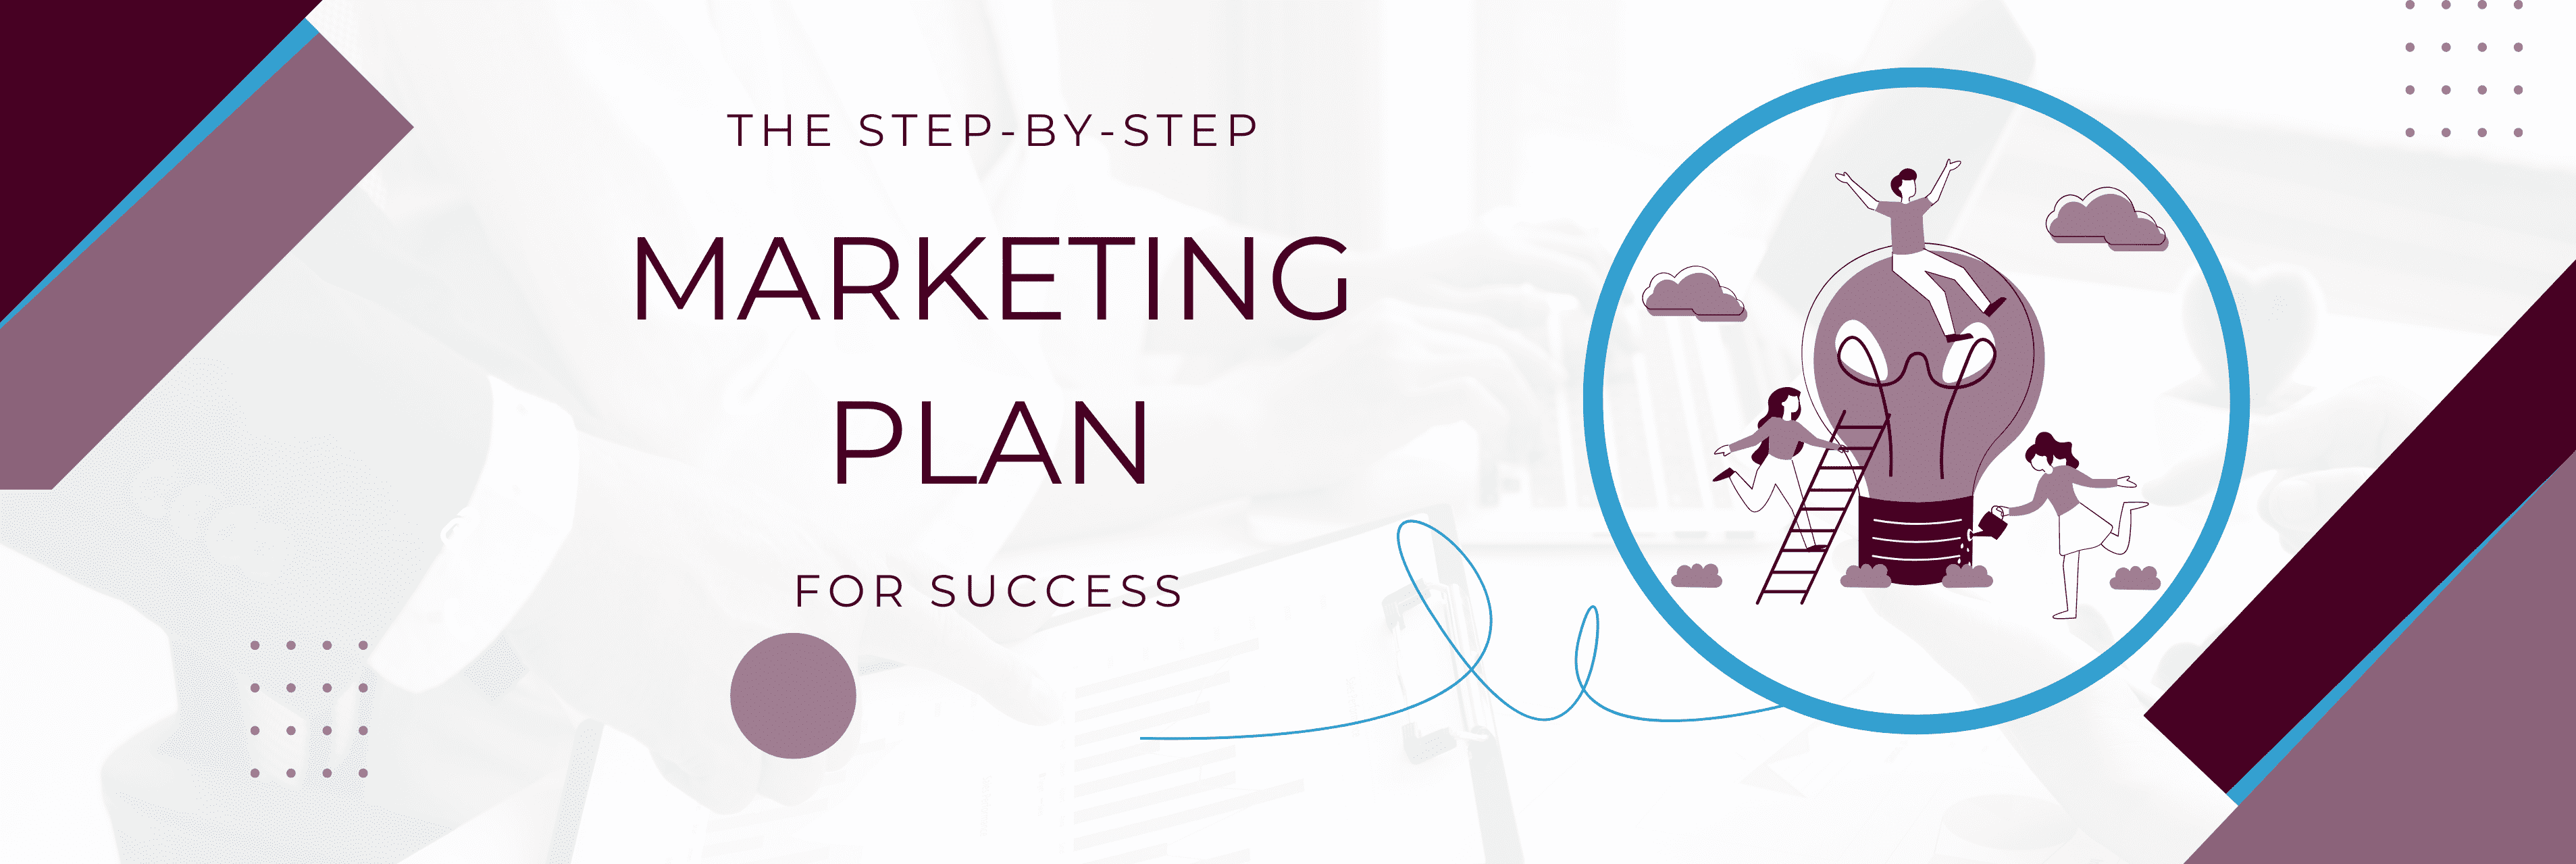 Marketing plan banner